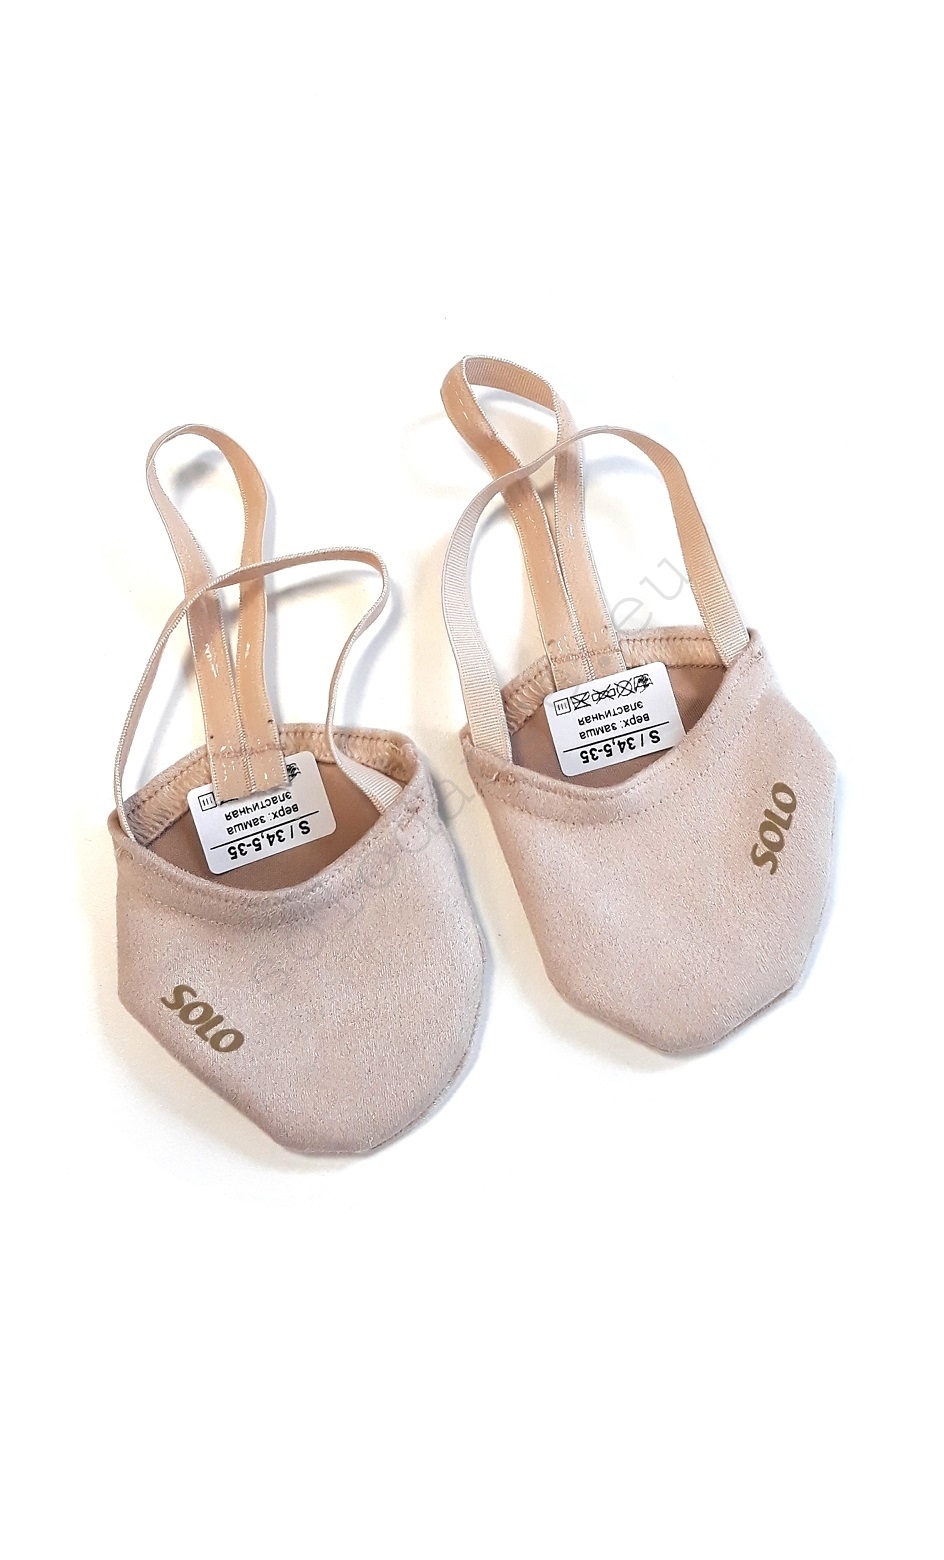 Elastic Toe Half-Shoes SOLO OB52 size XXS (31,5-32)